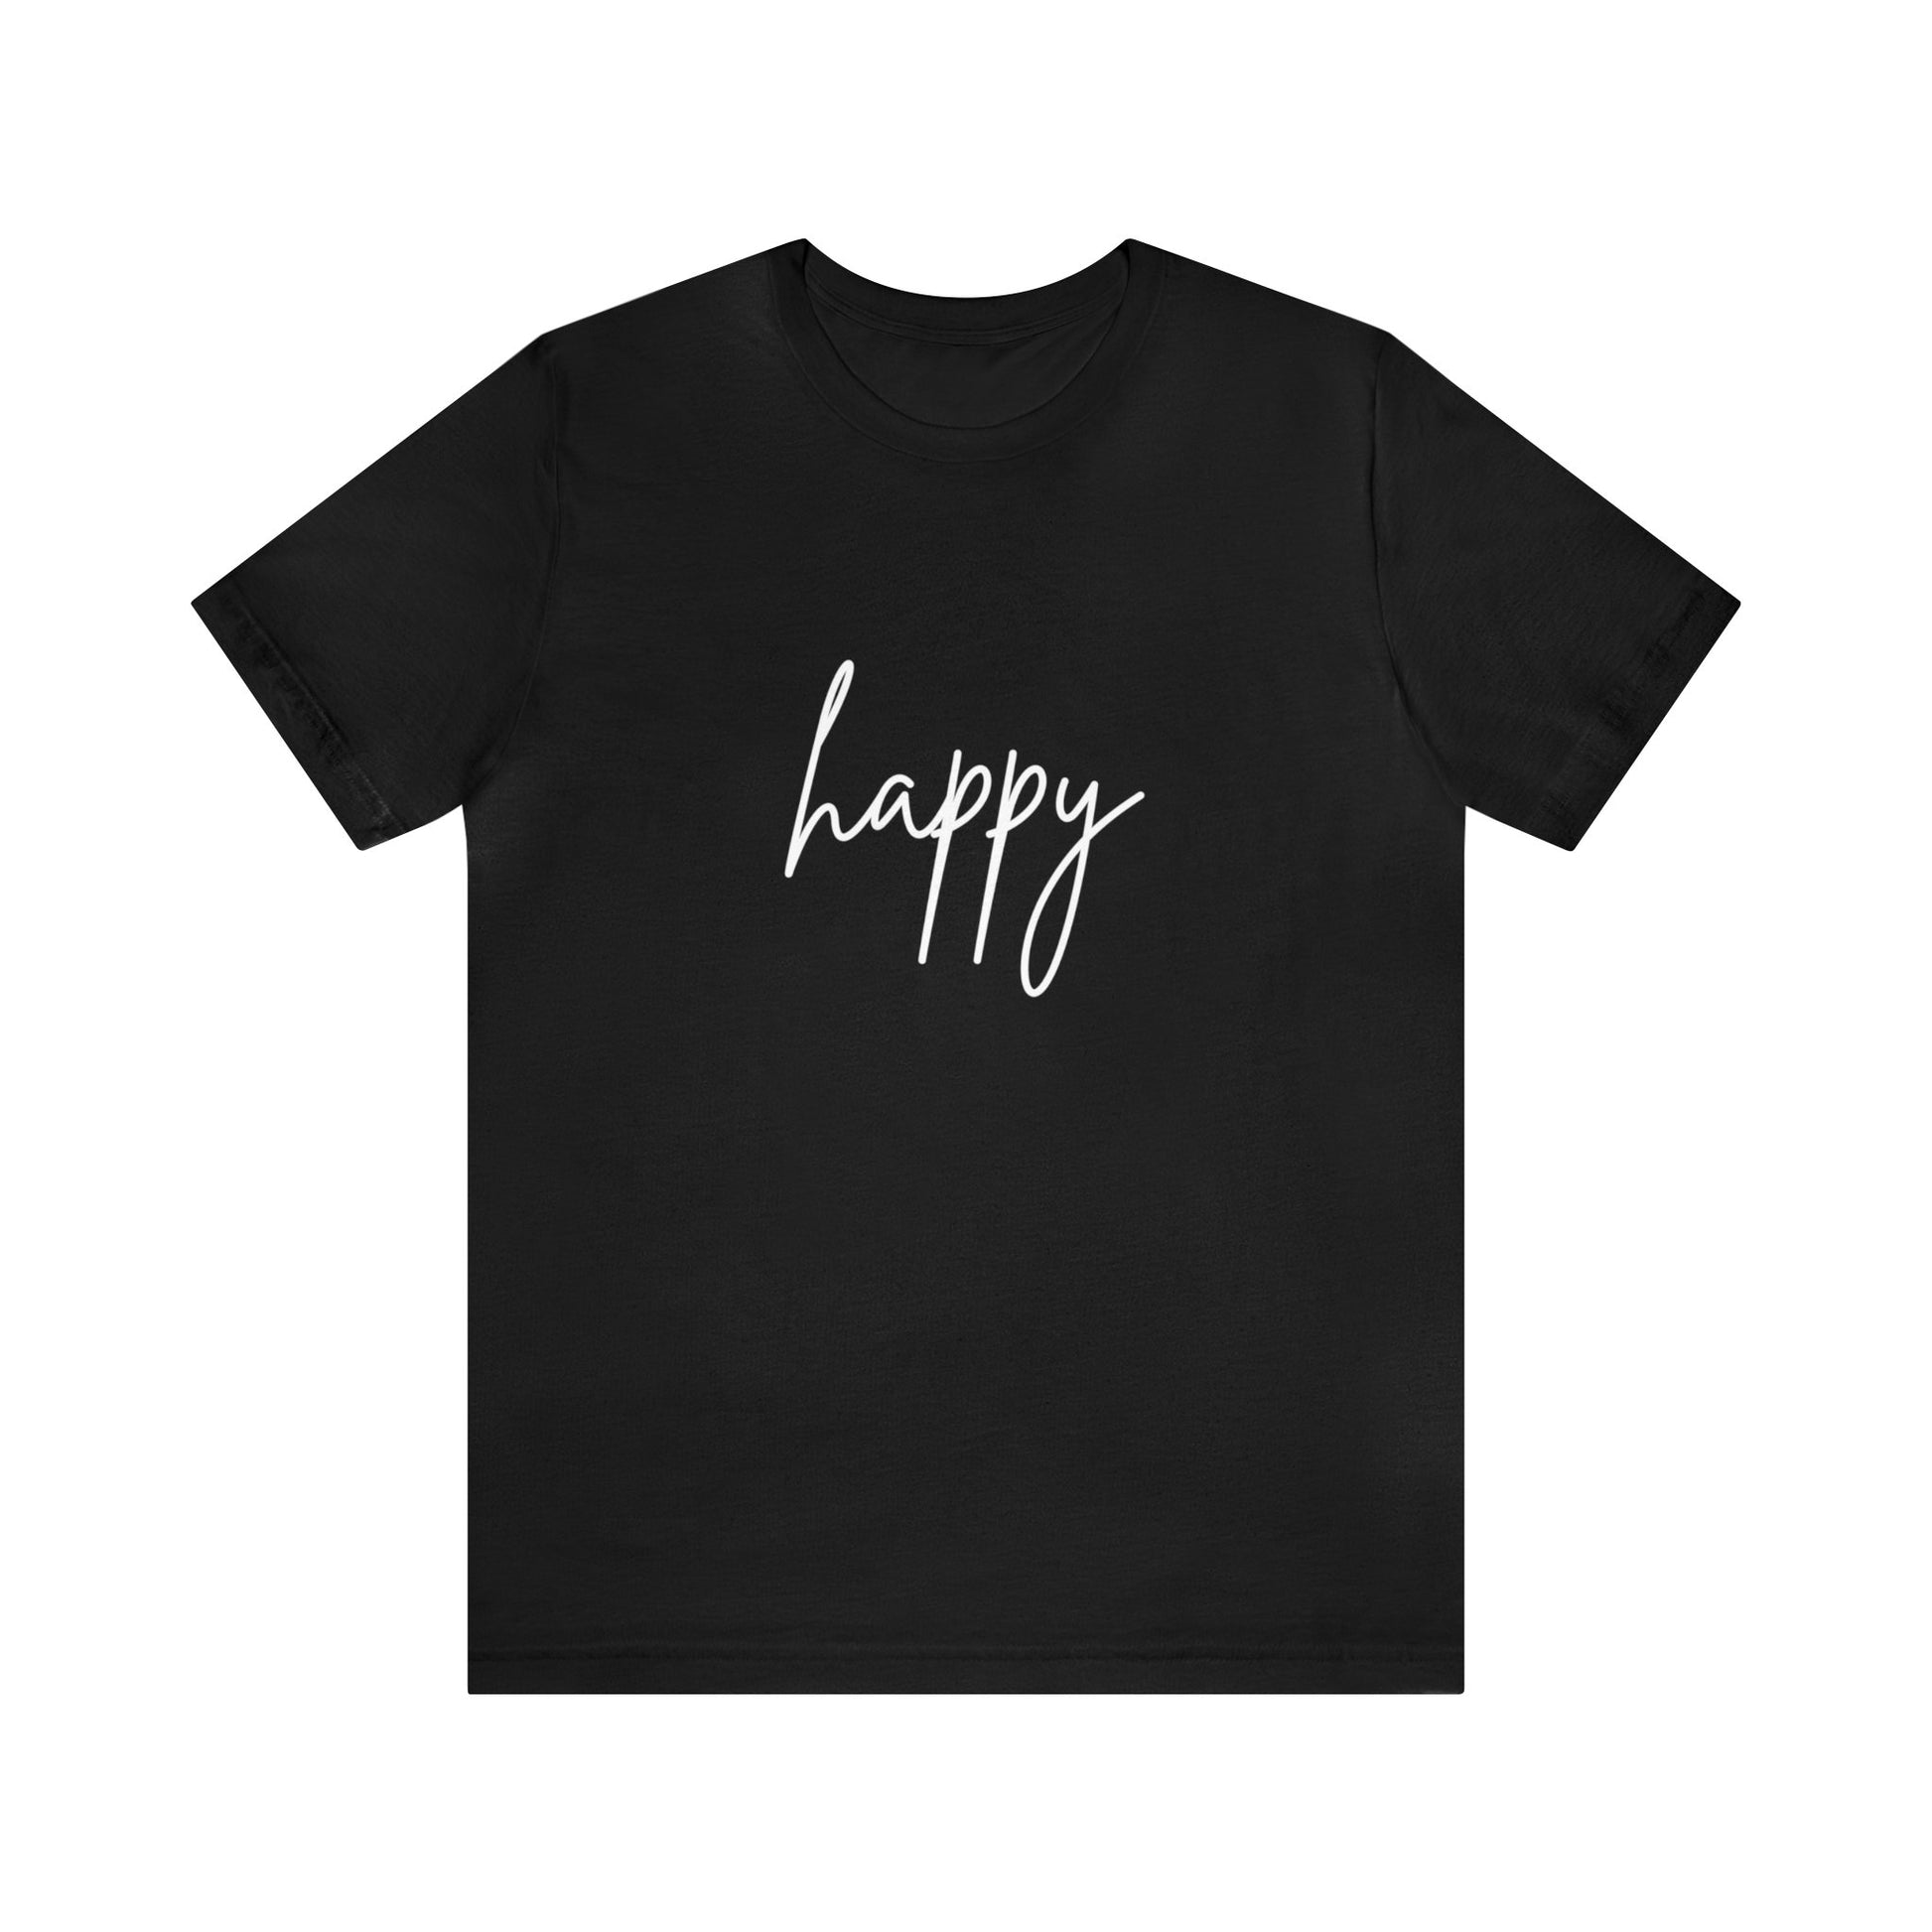 Happy T-shirt, girl gift, minimalist gift, custom t-shirt, funny shirts, crew neck shirt, unisex t-shirt, girl shirt